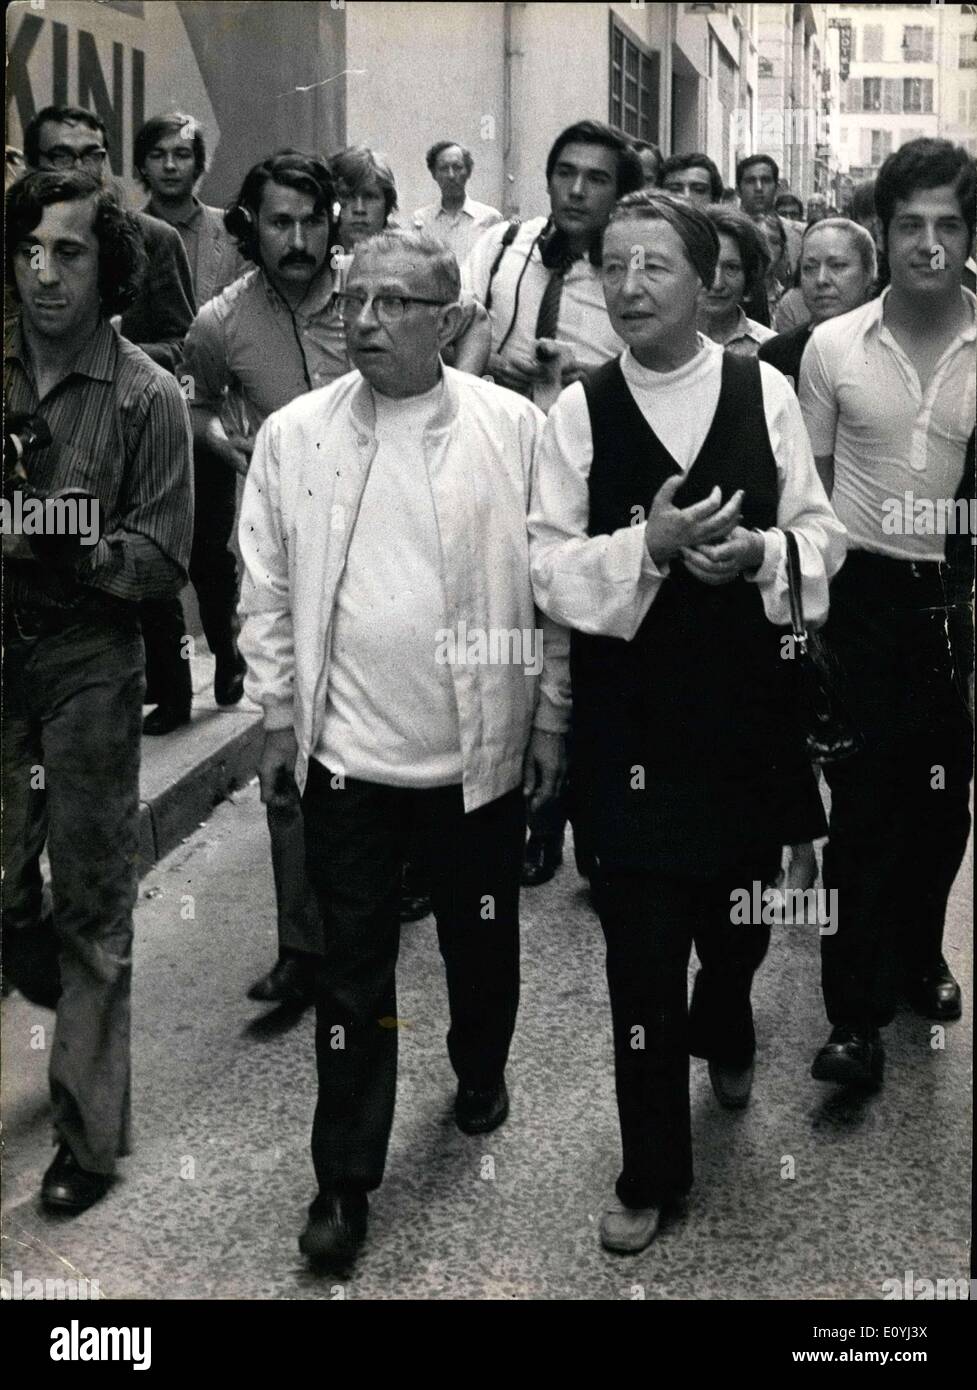 Juin 27, 1970 - Jean-Paul Sartre protestant contre la police Photo Stock -  Alamy